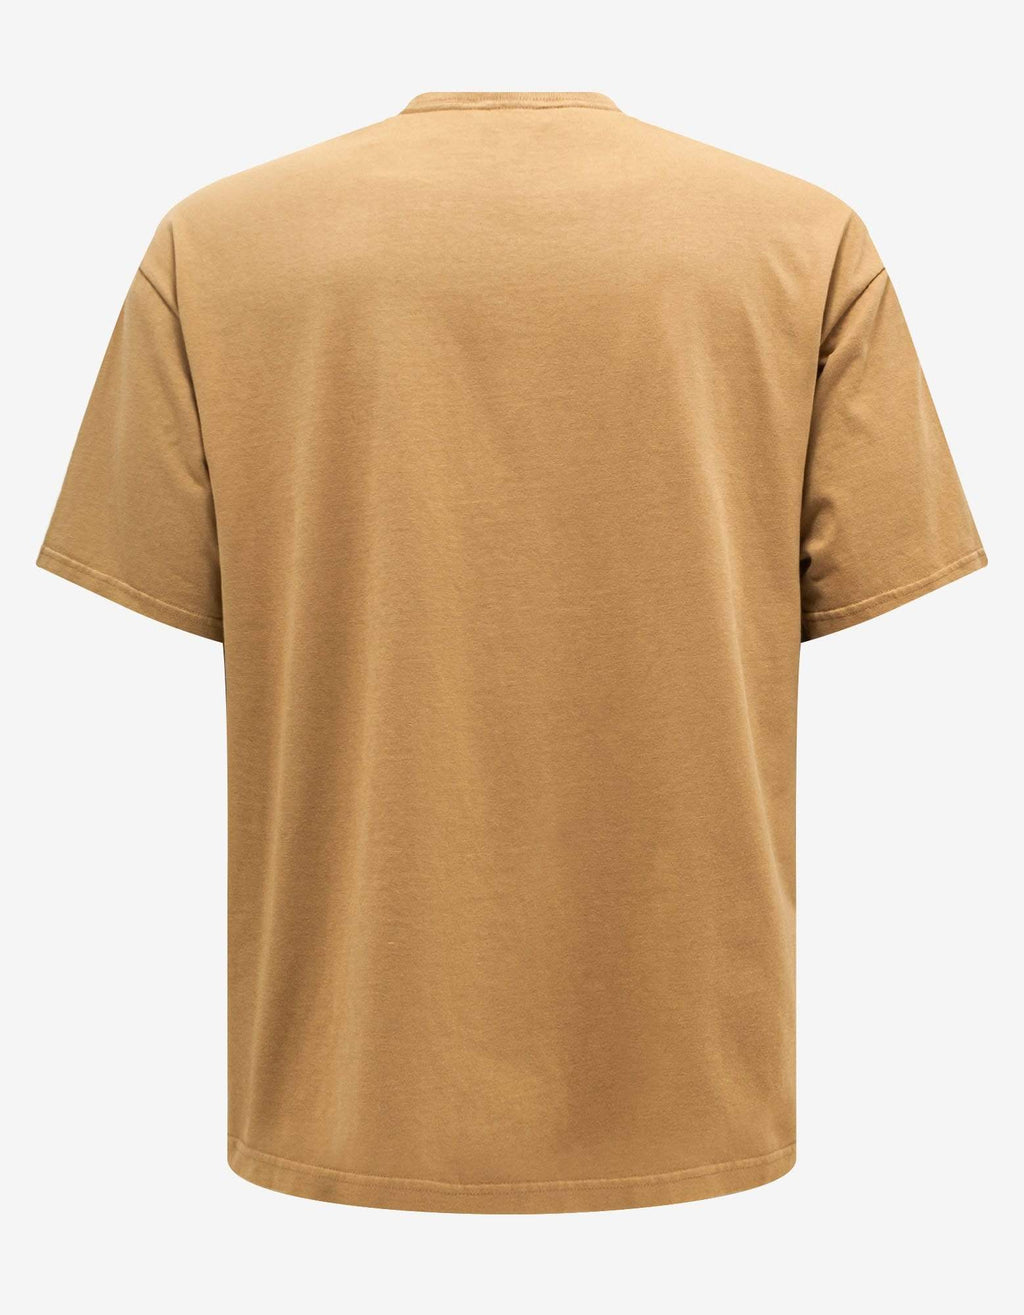 Balenciaga Beige BB Corp Embroidery Medium Fit T-Shirt